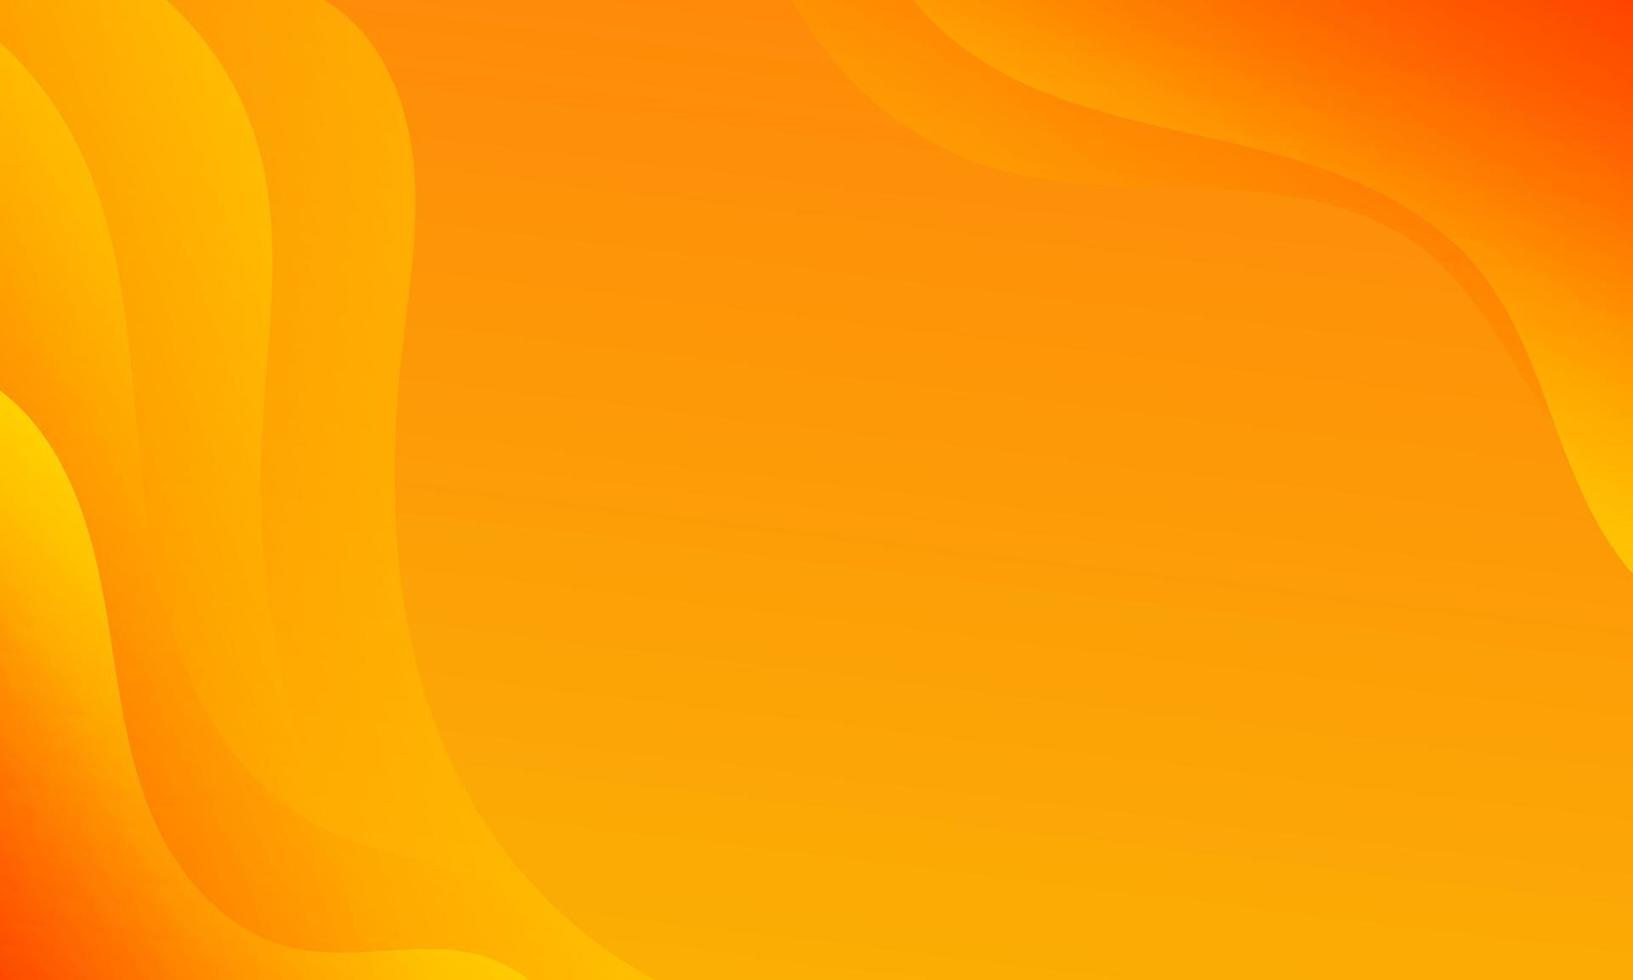 Abstract Orange Fluid Wave Background vector